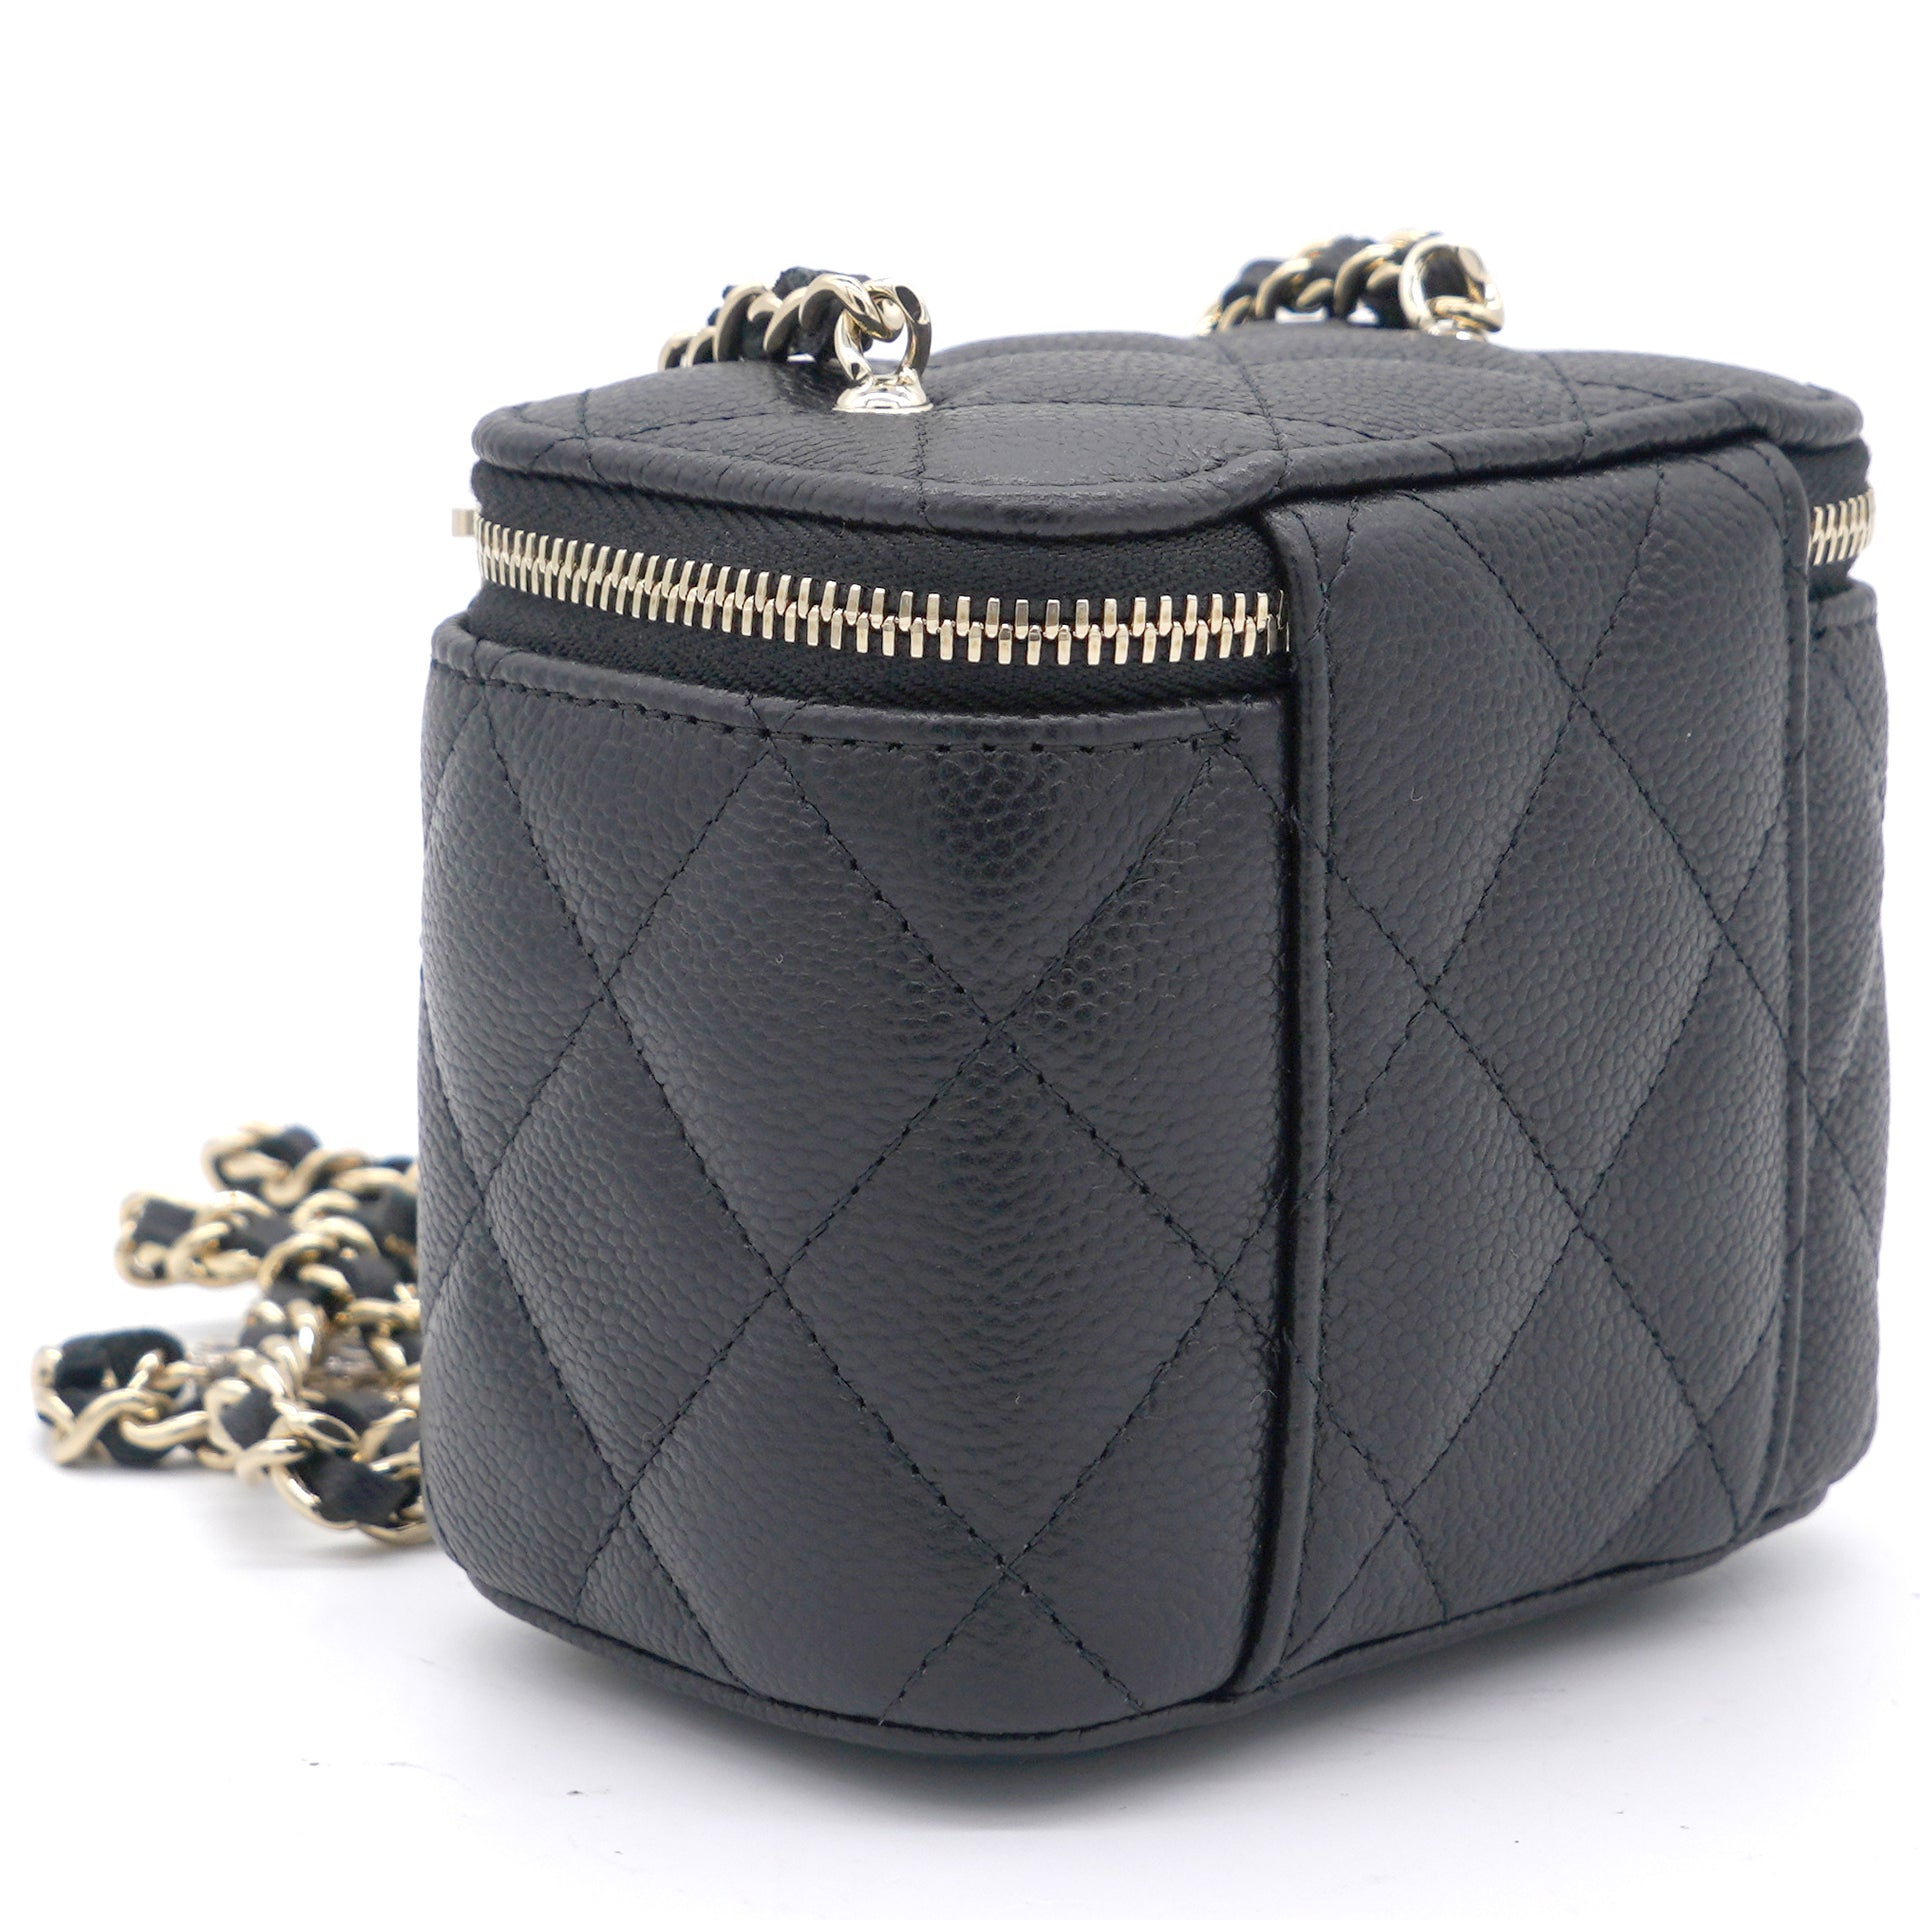 Chanel Melody Camera Bag White Caviar Gold Hardware 22S – Coco Approved  Studio